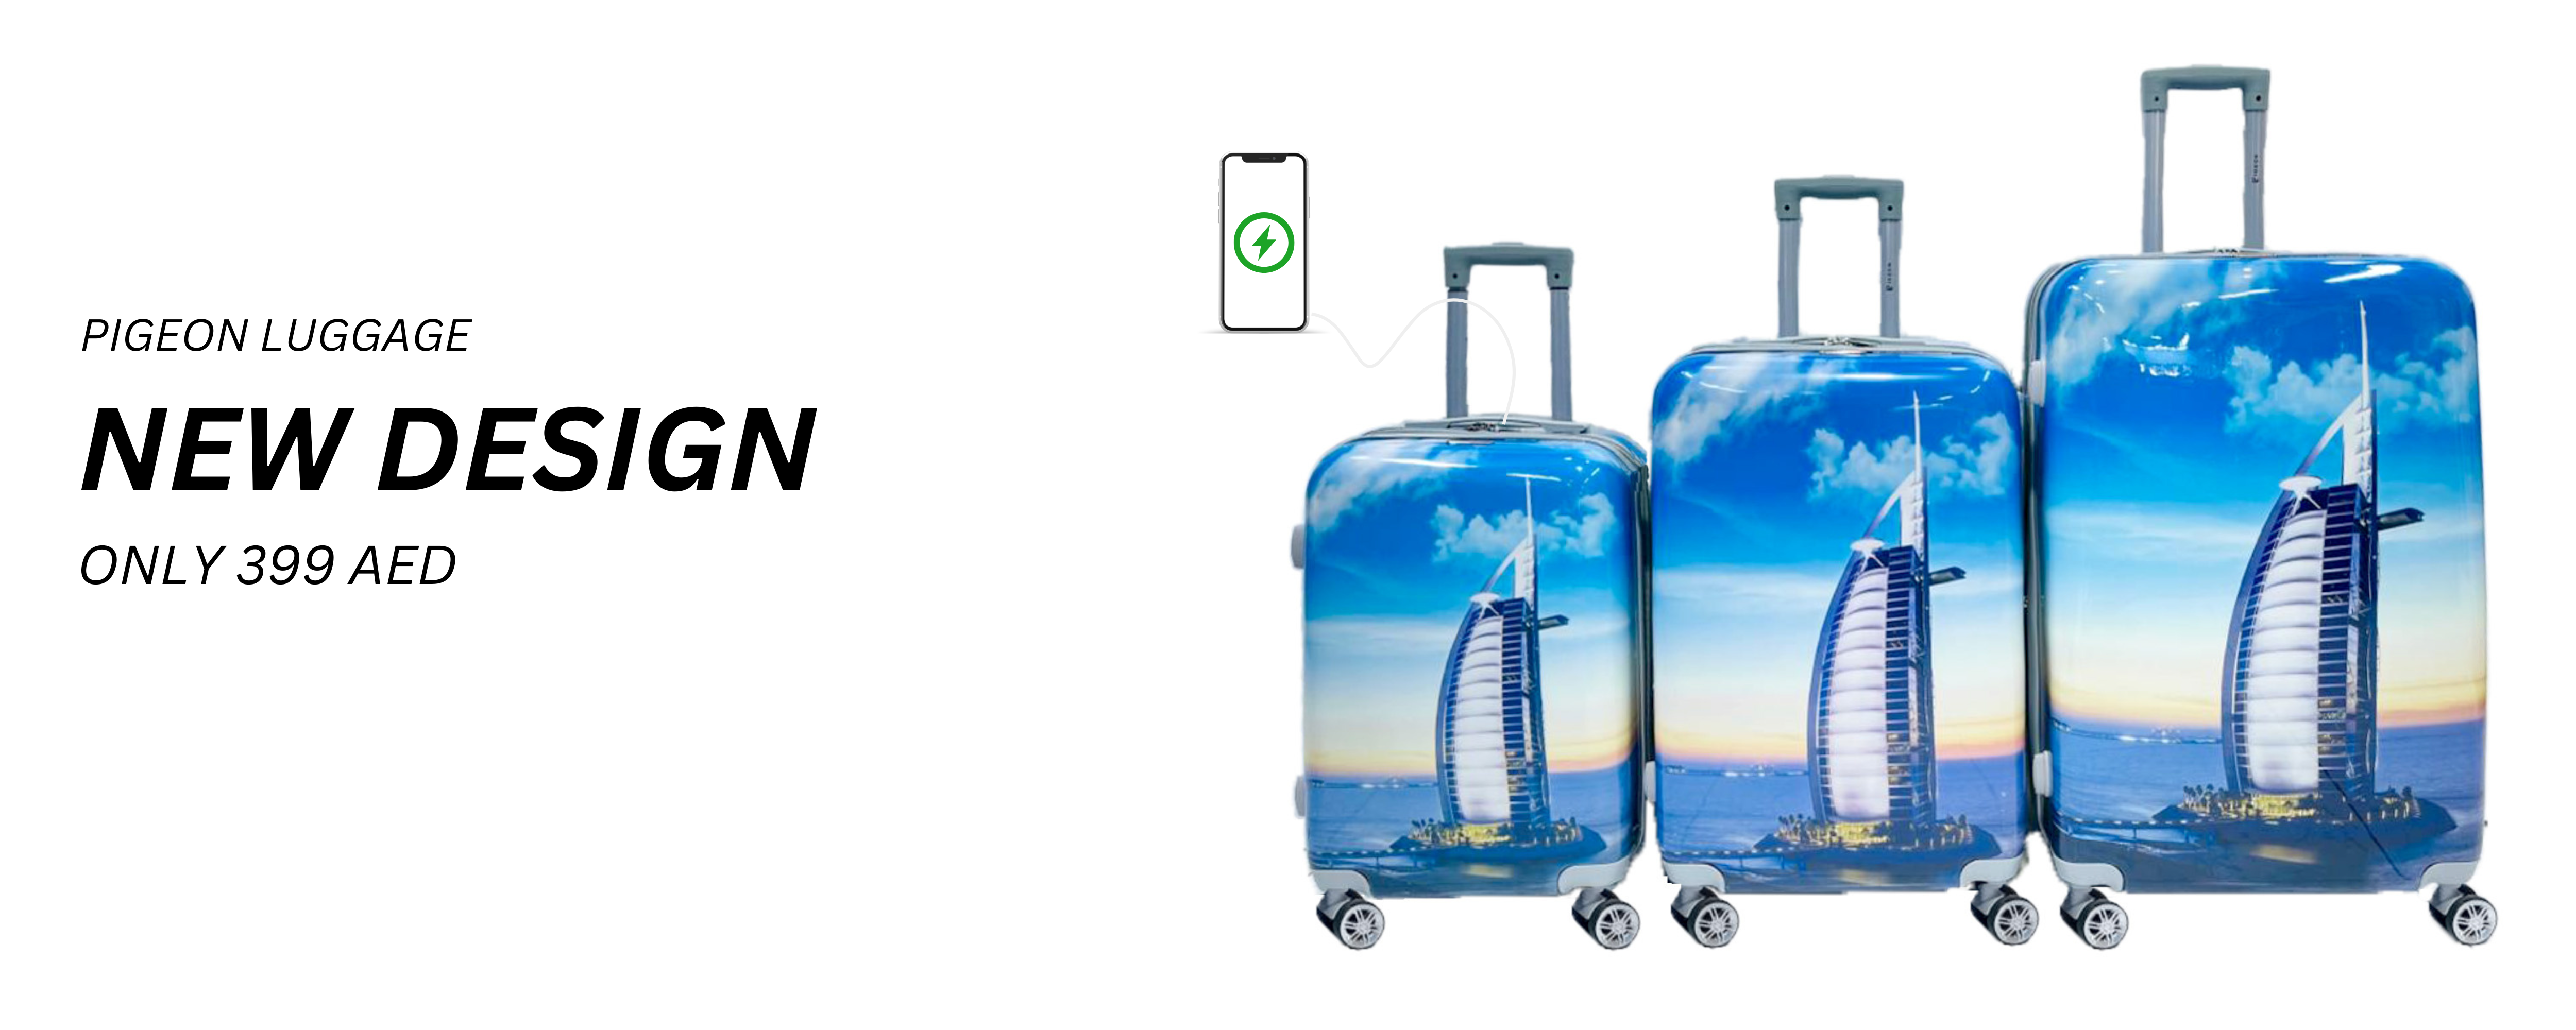 pigeon luggage new design pc gift luggage burj al arab theme